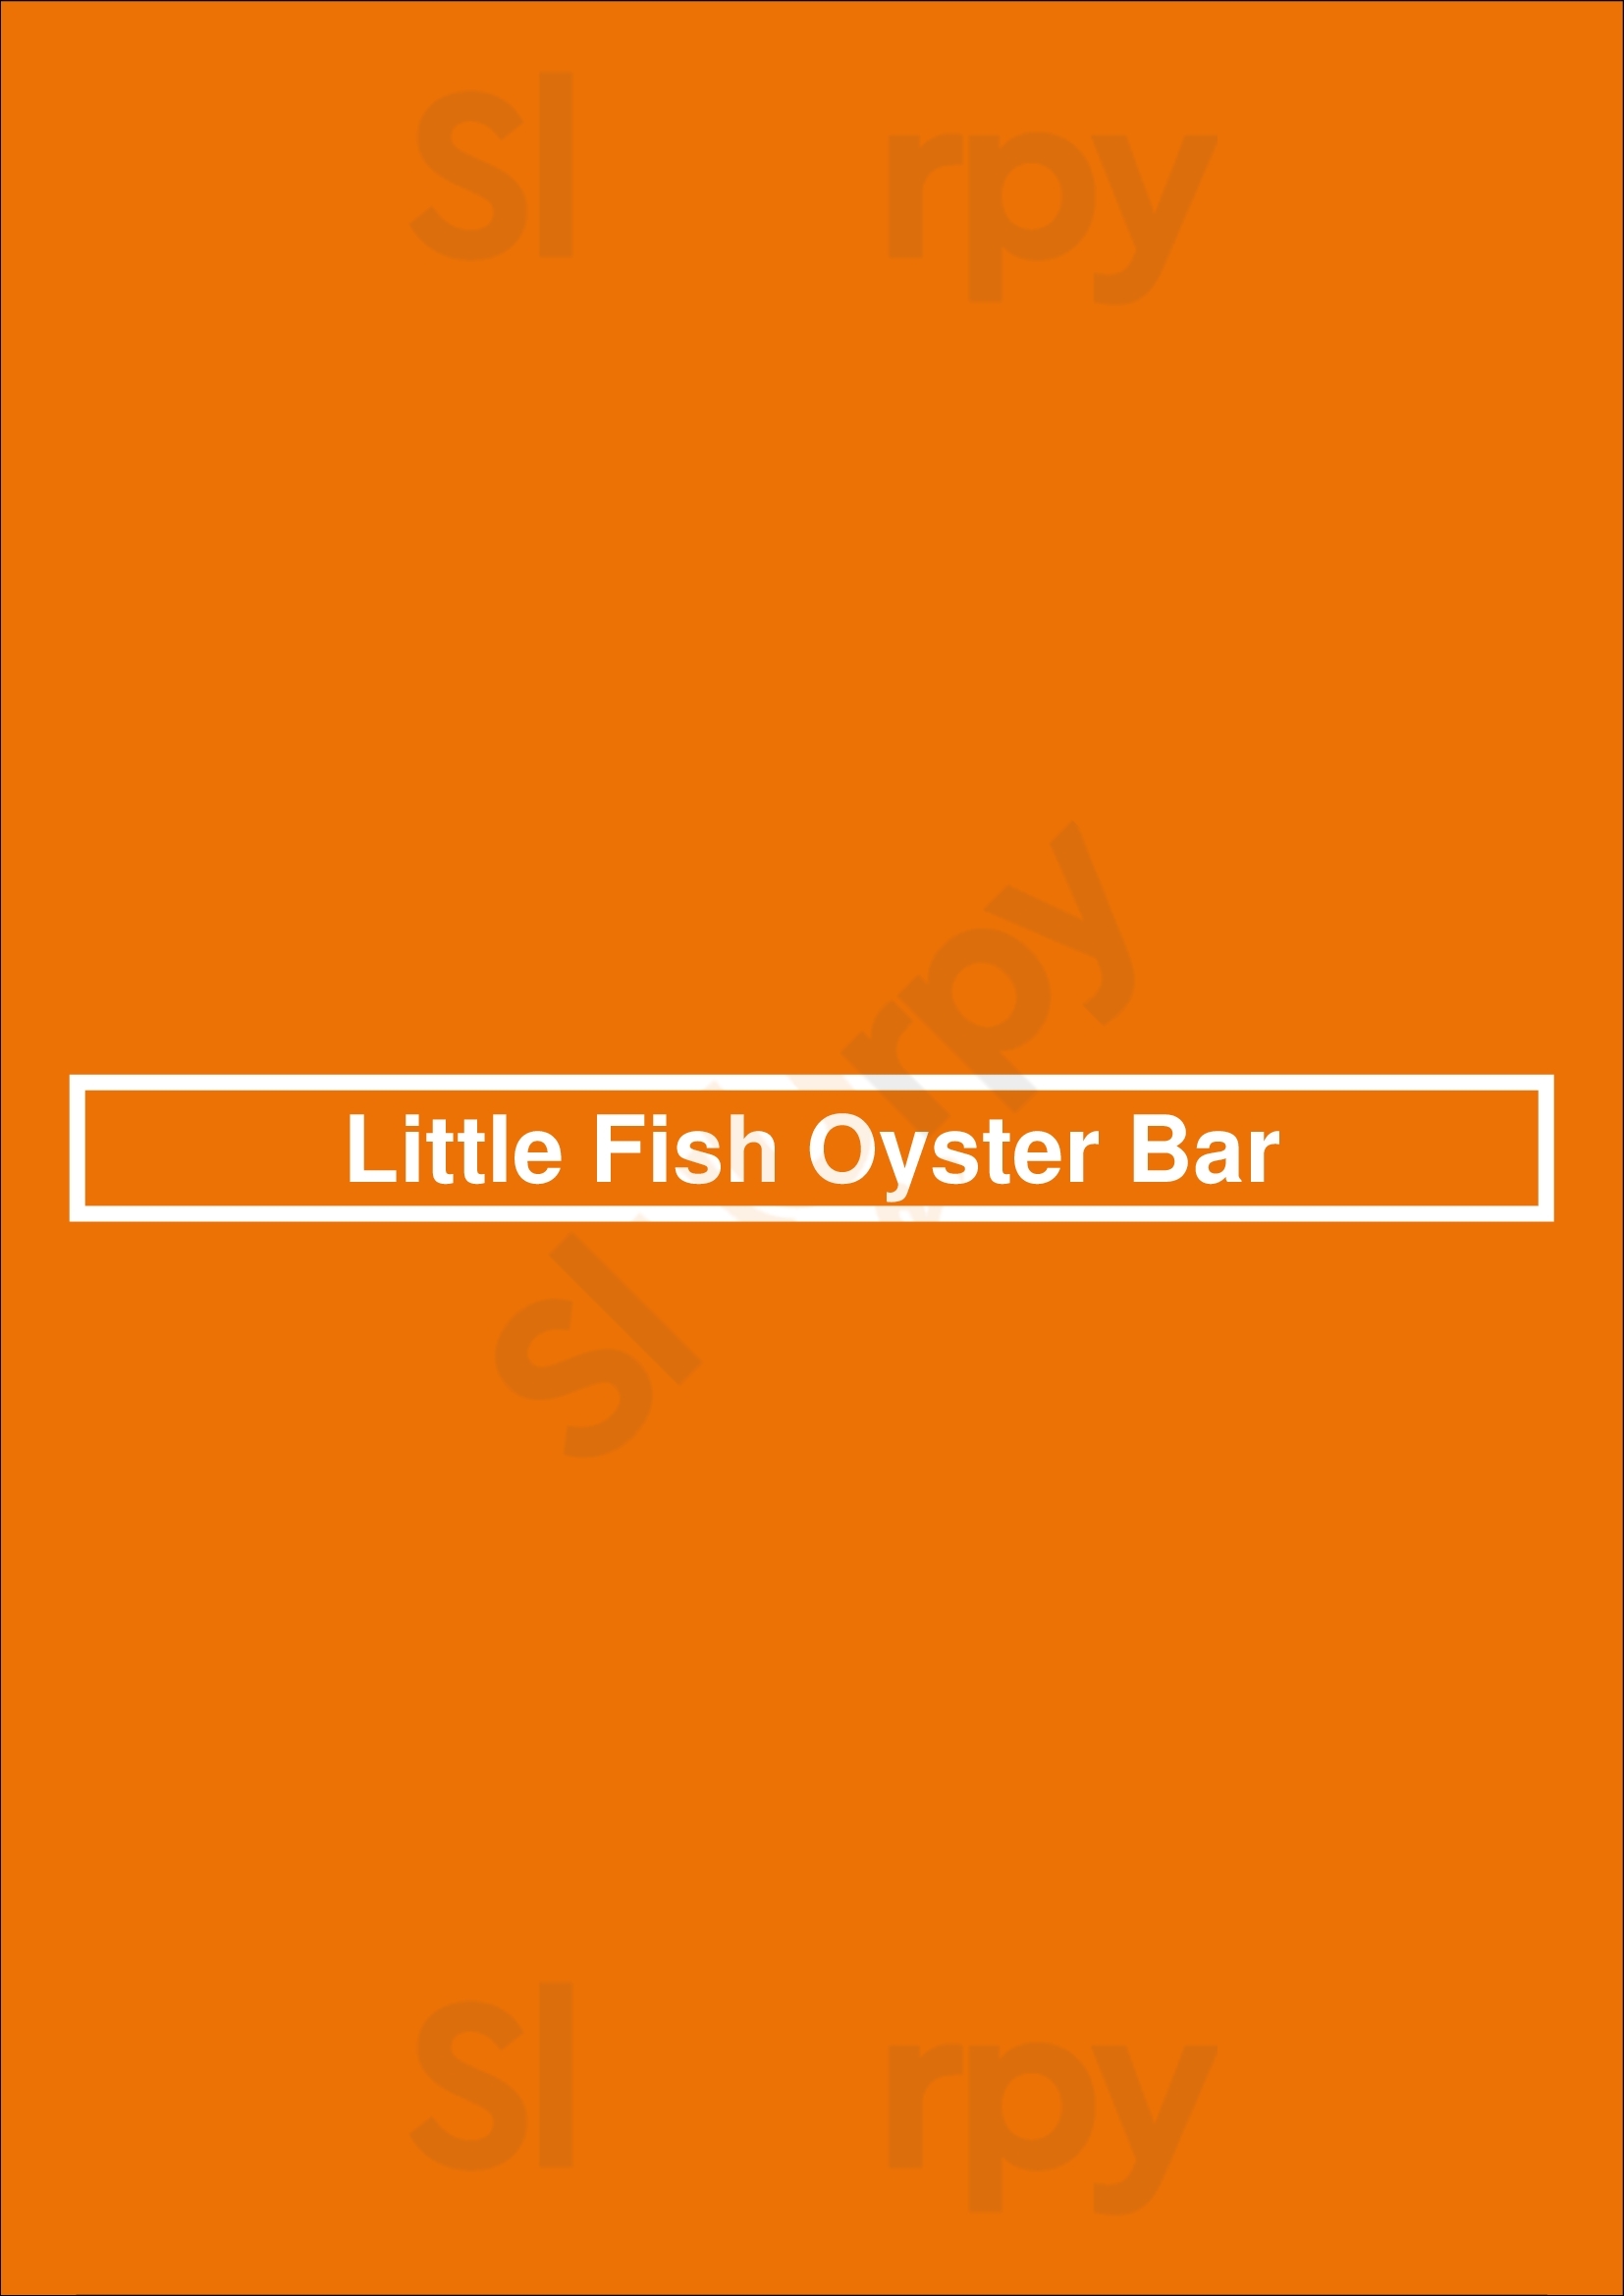 Little Fish Oyster Bar Halifax Menu - 1